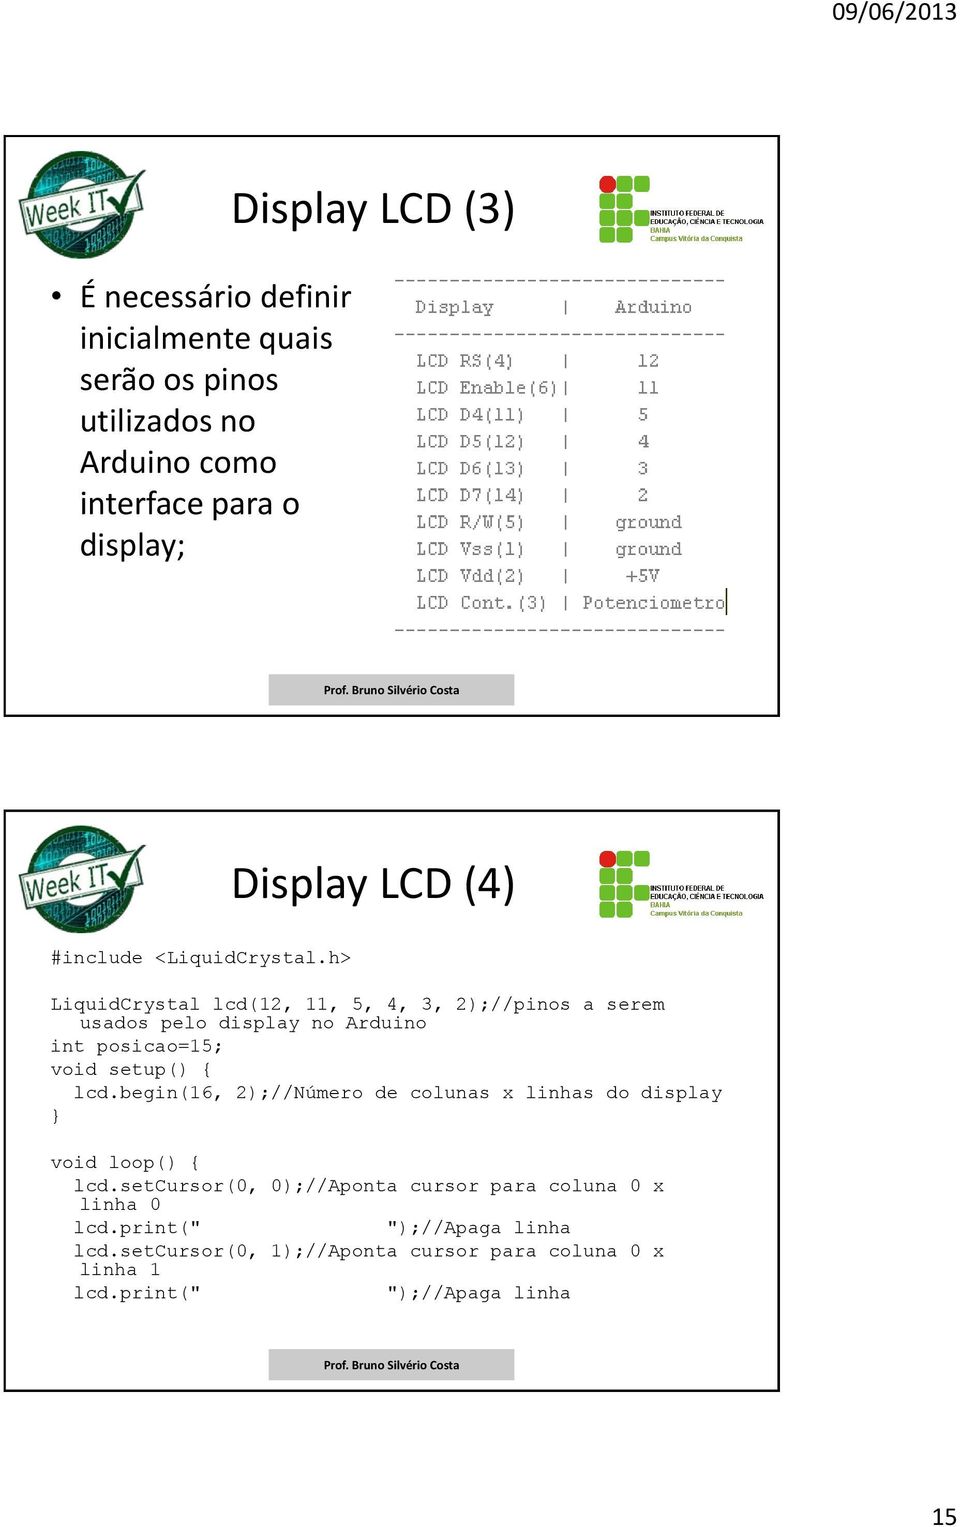 h> LiquidCrystal lcd(12, 11, 5, 4, 3, 2);//pinos a serem usados pelo display no Arduino int posicao=15; void setup() { lcd.